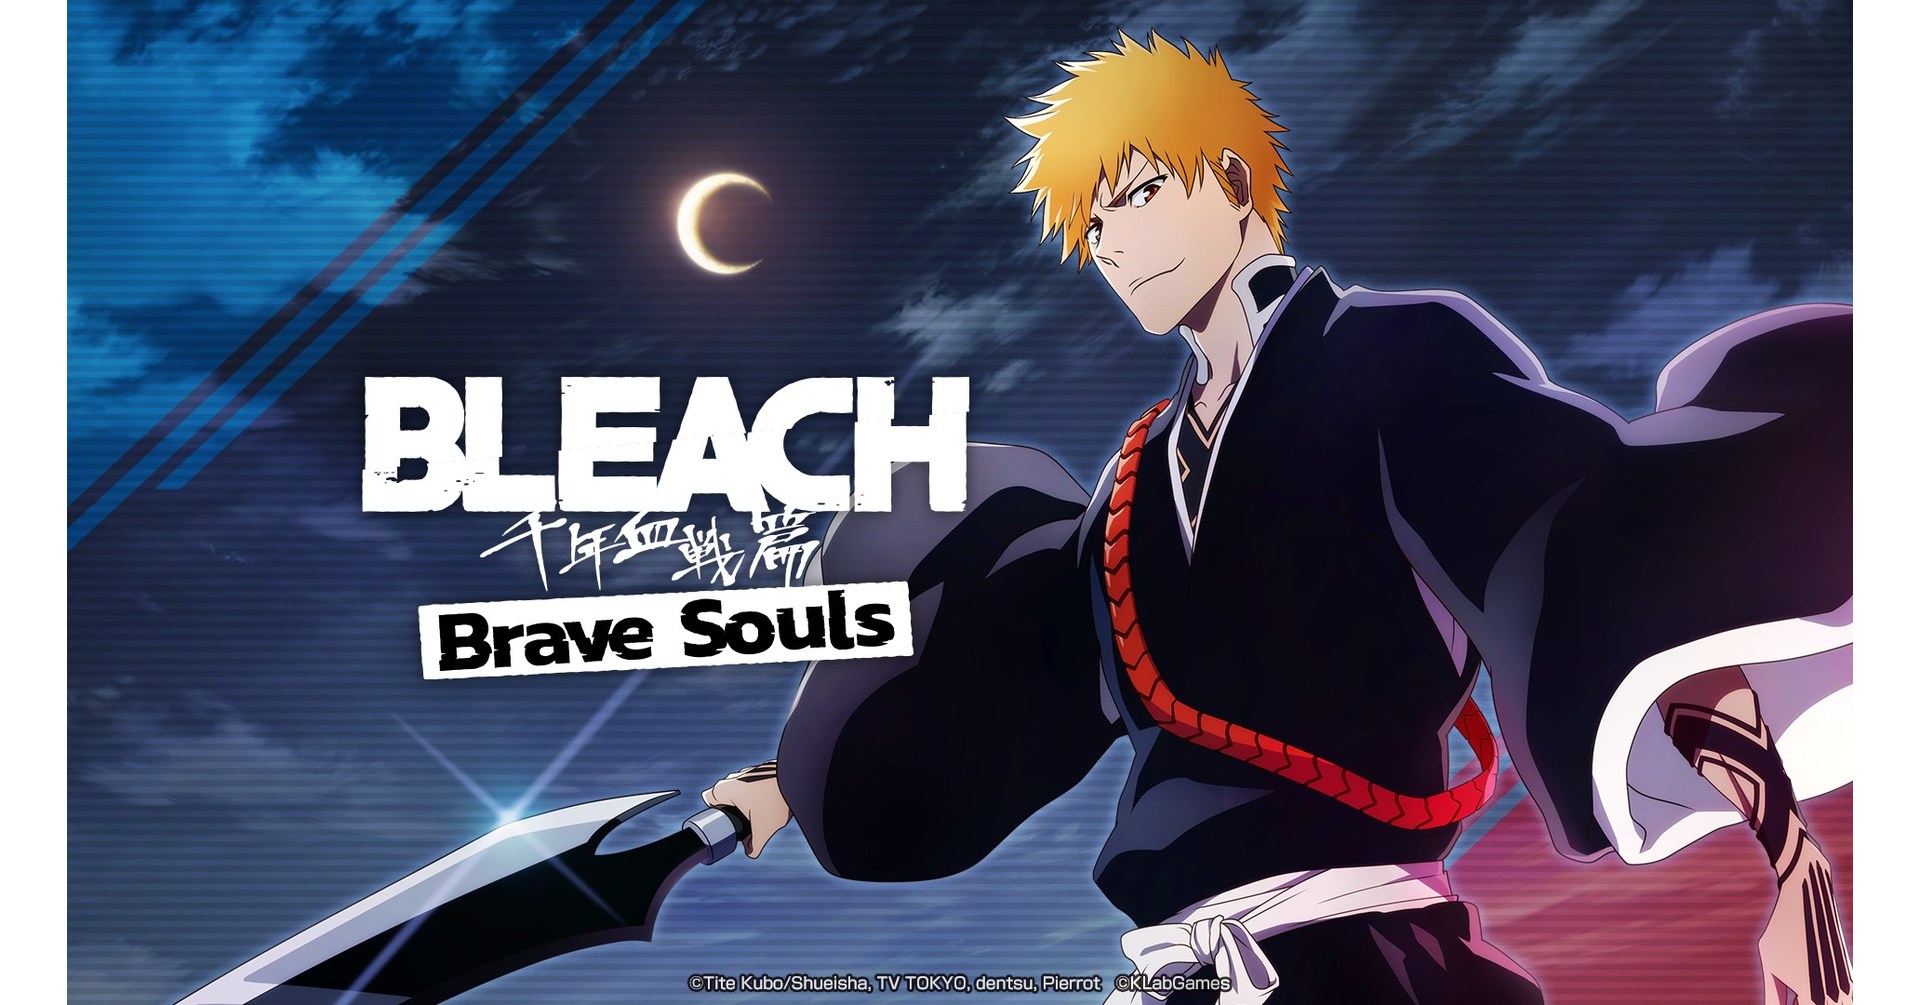 Bleach: Thousand-Year Blood War TV Anime Starts October 10